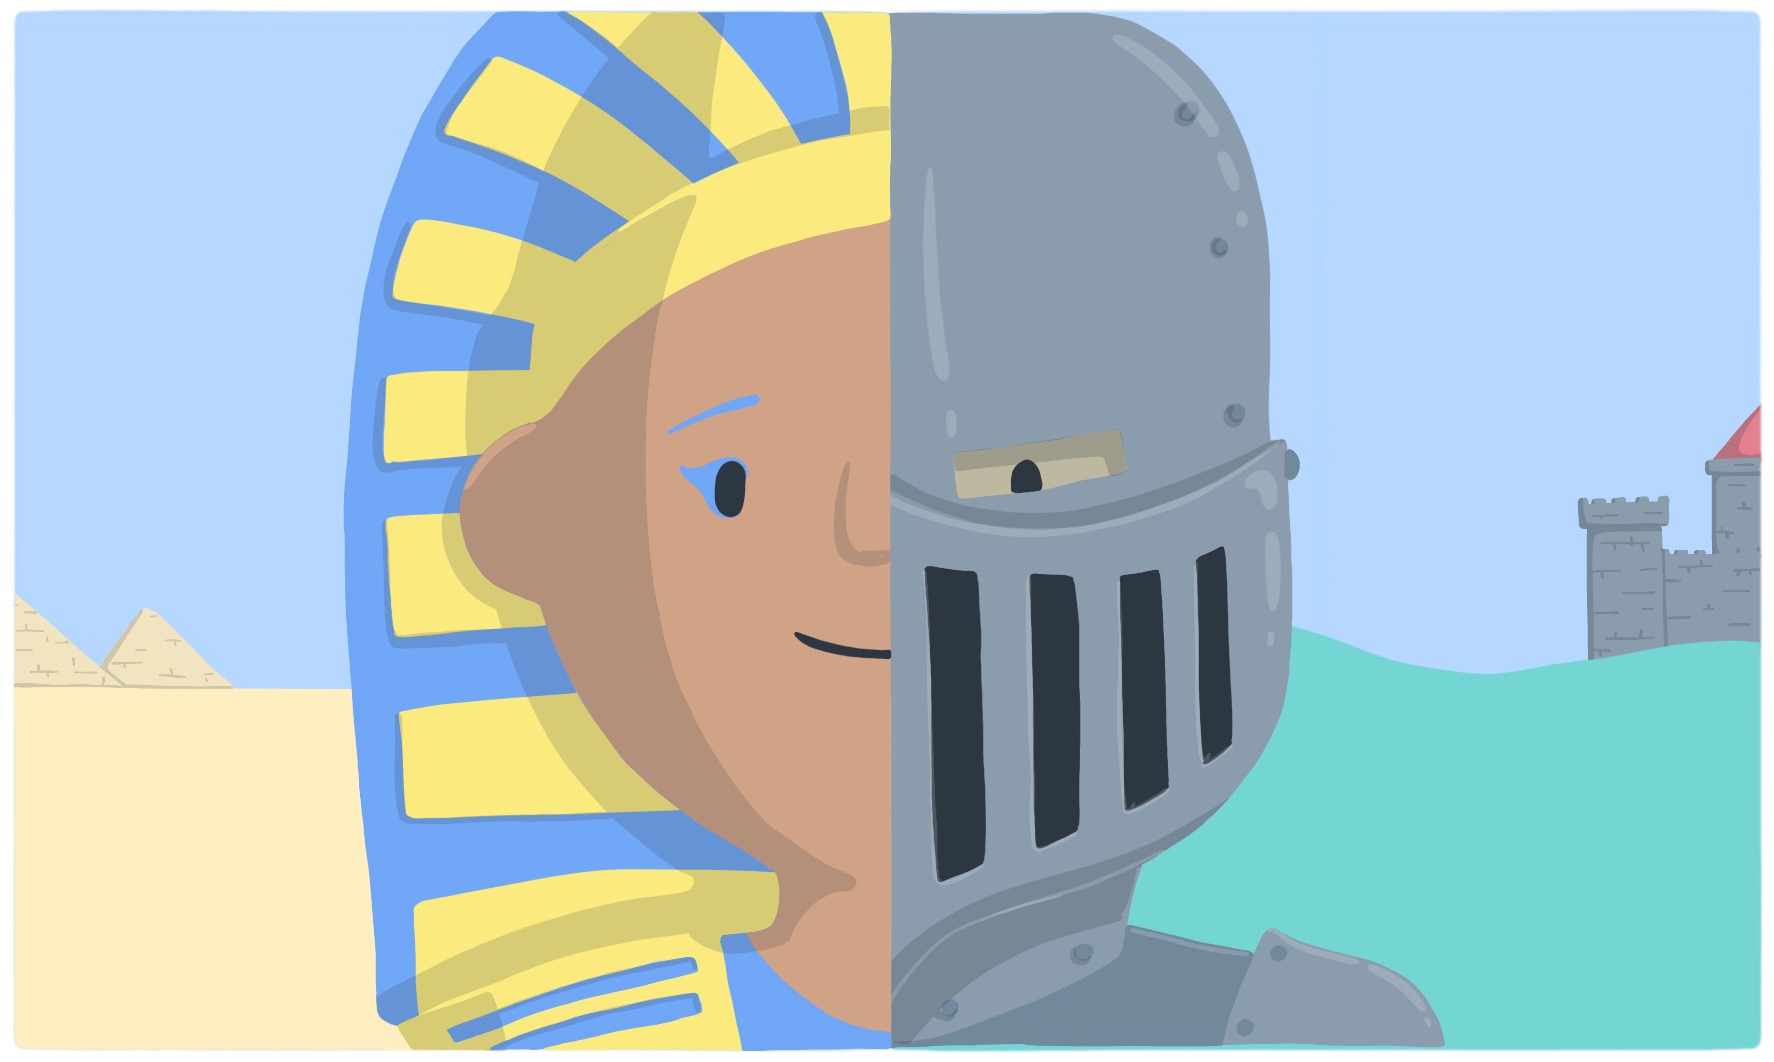 Half of a pharaoh's face and half a knight's face